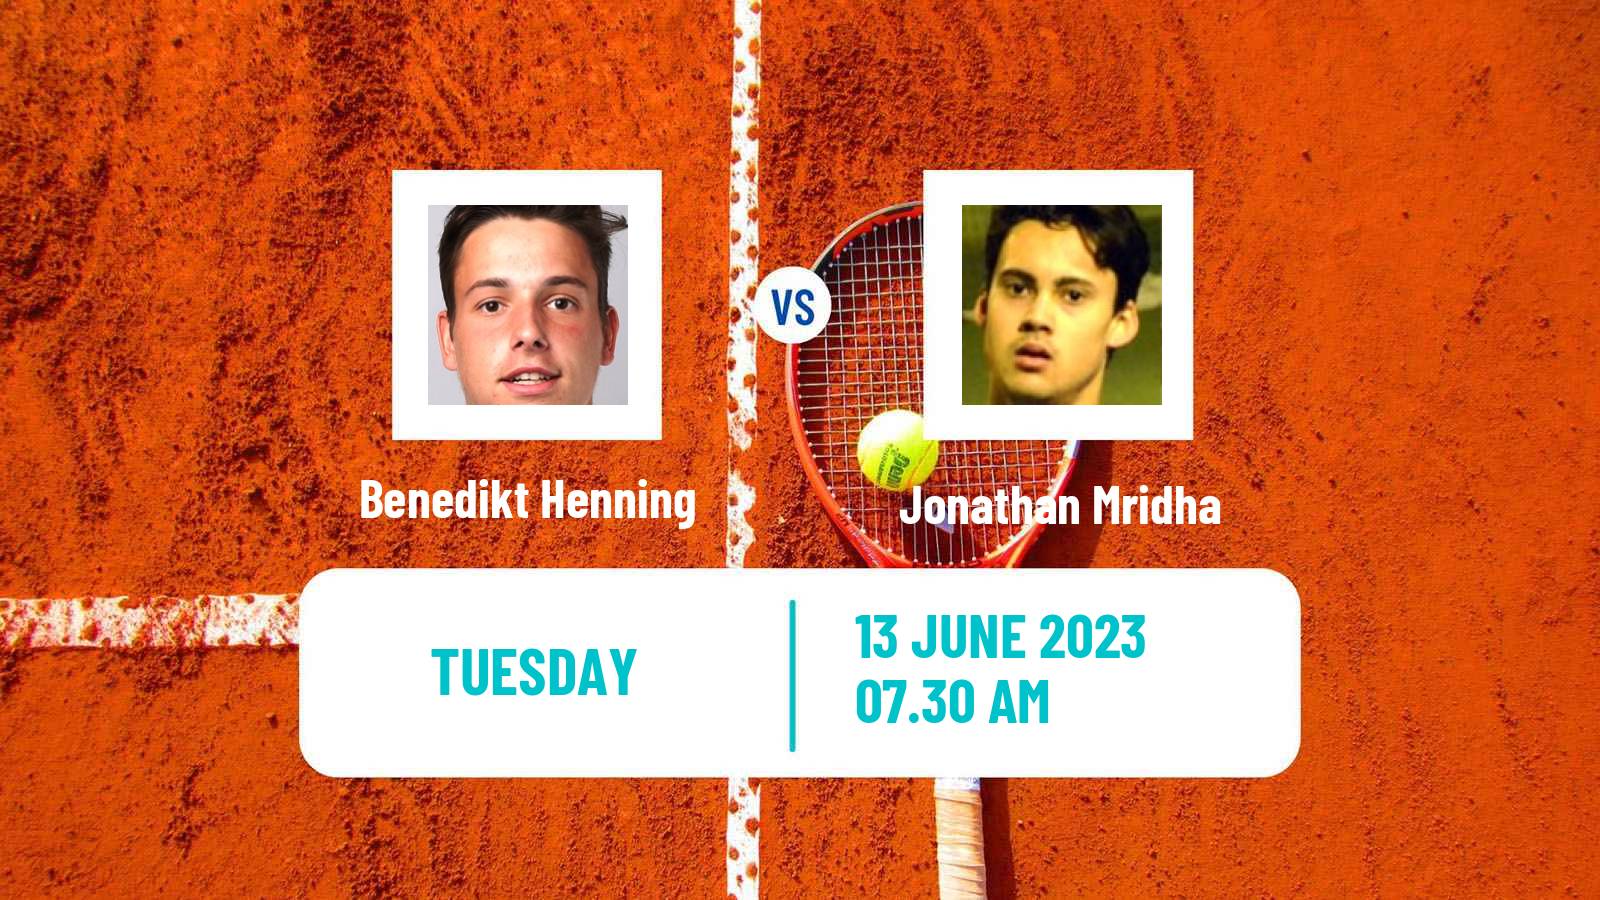 Tennis ITF M25 Risskov Aarhus Men Benedikt Henning - Jonathan Mridha